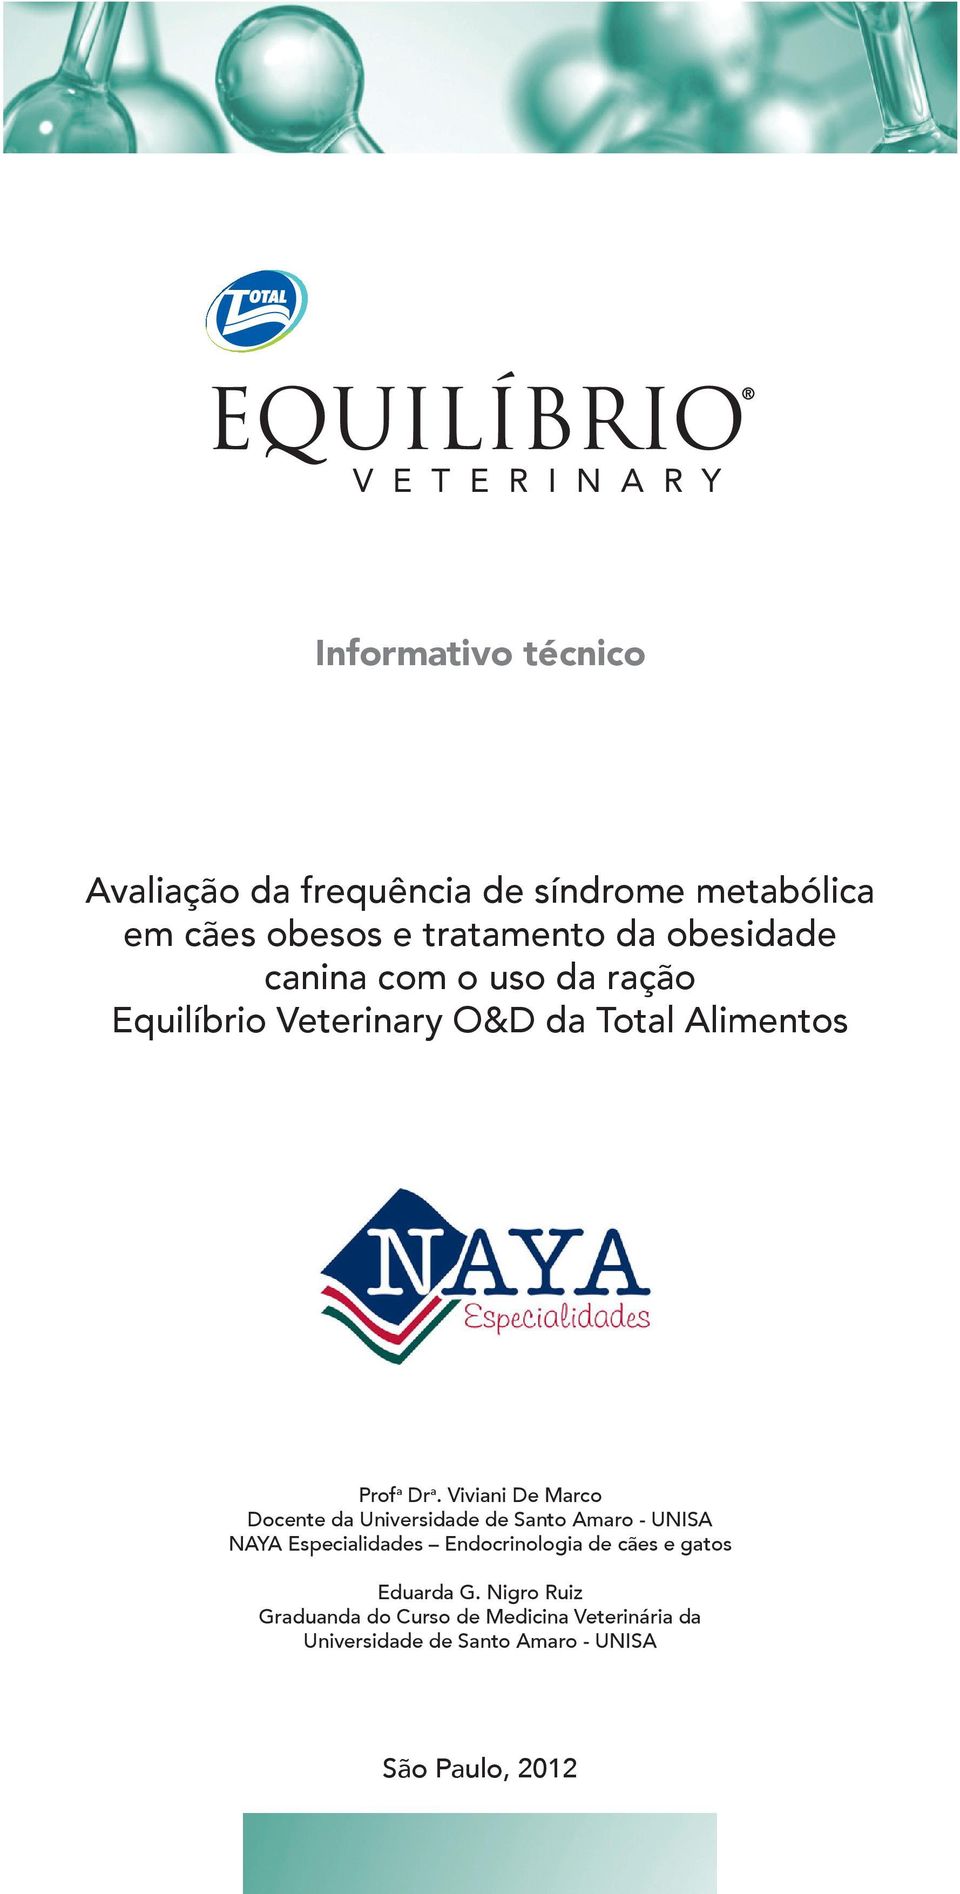 Viviani De Marco Docente da Universidade de Santo Amaro - UNISA NAYA Especialidades Endocrinologia de cães